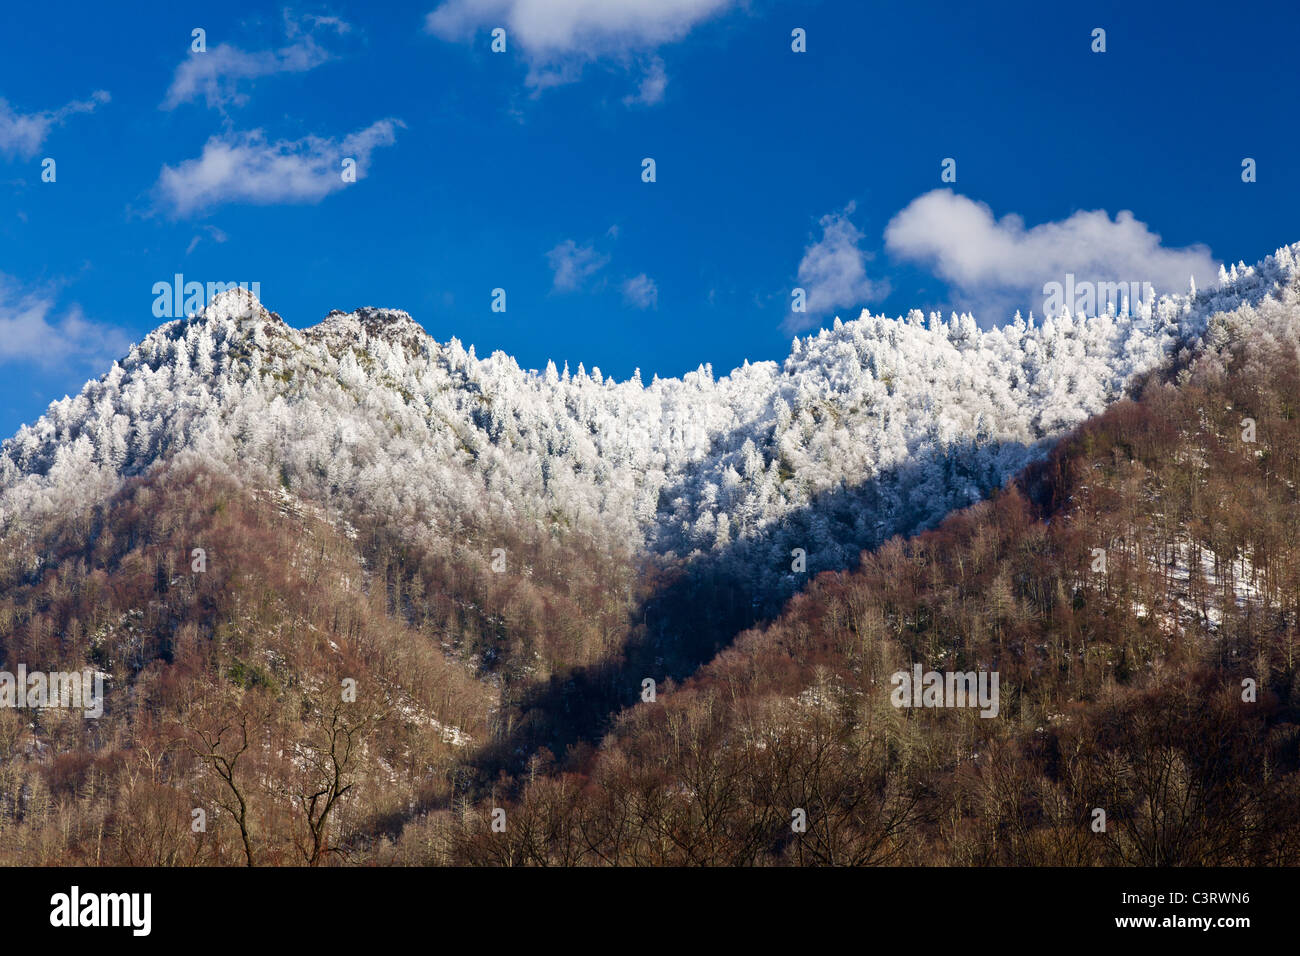 Parco Nazionale di Great Smoky Mountains, STATI UNITI D'AMERICA - Vista di comignoli ricoperta di neve Foto Stock